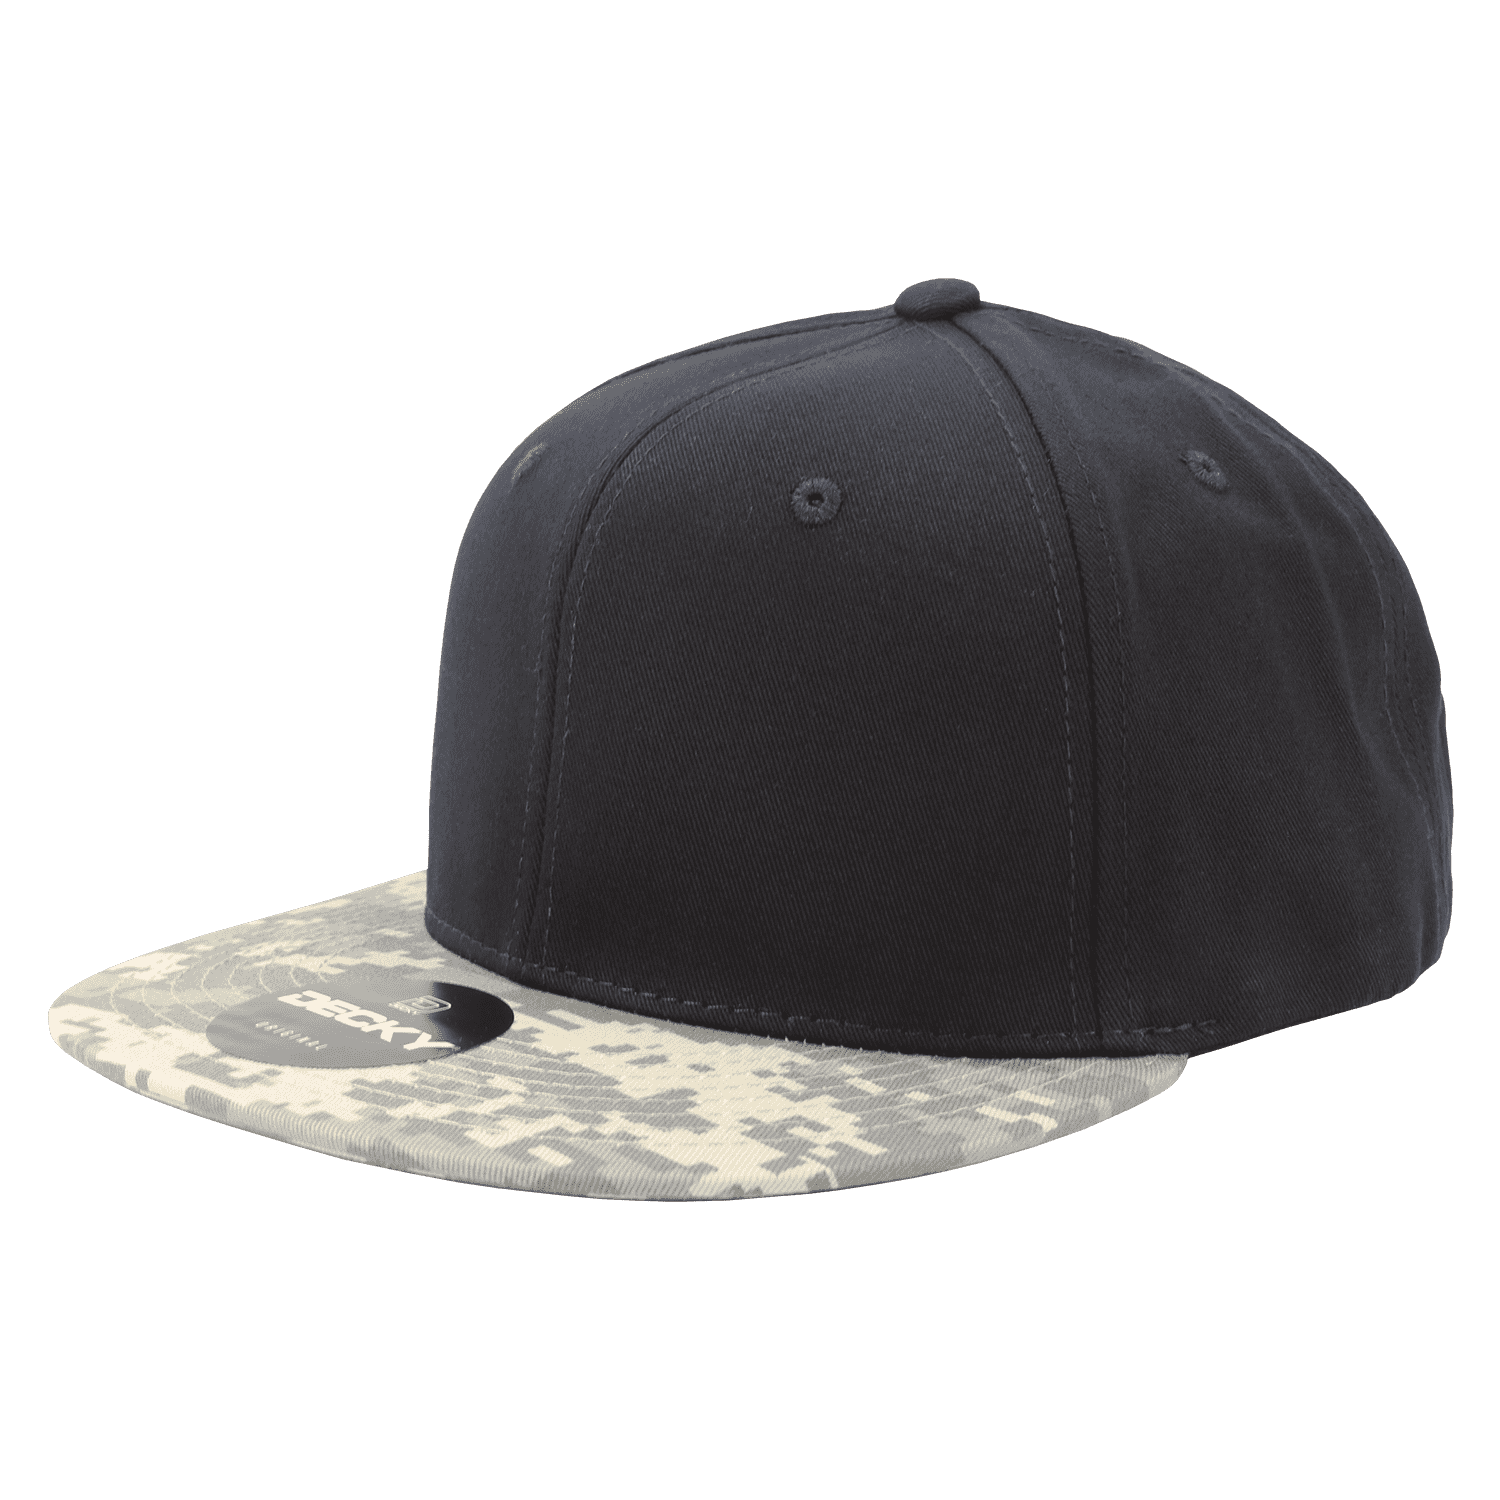 Decky 1047 Digital Camo Snapback Cap - Army Digicam Black - HIT a Double - 1